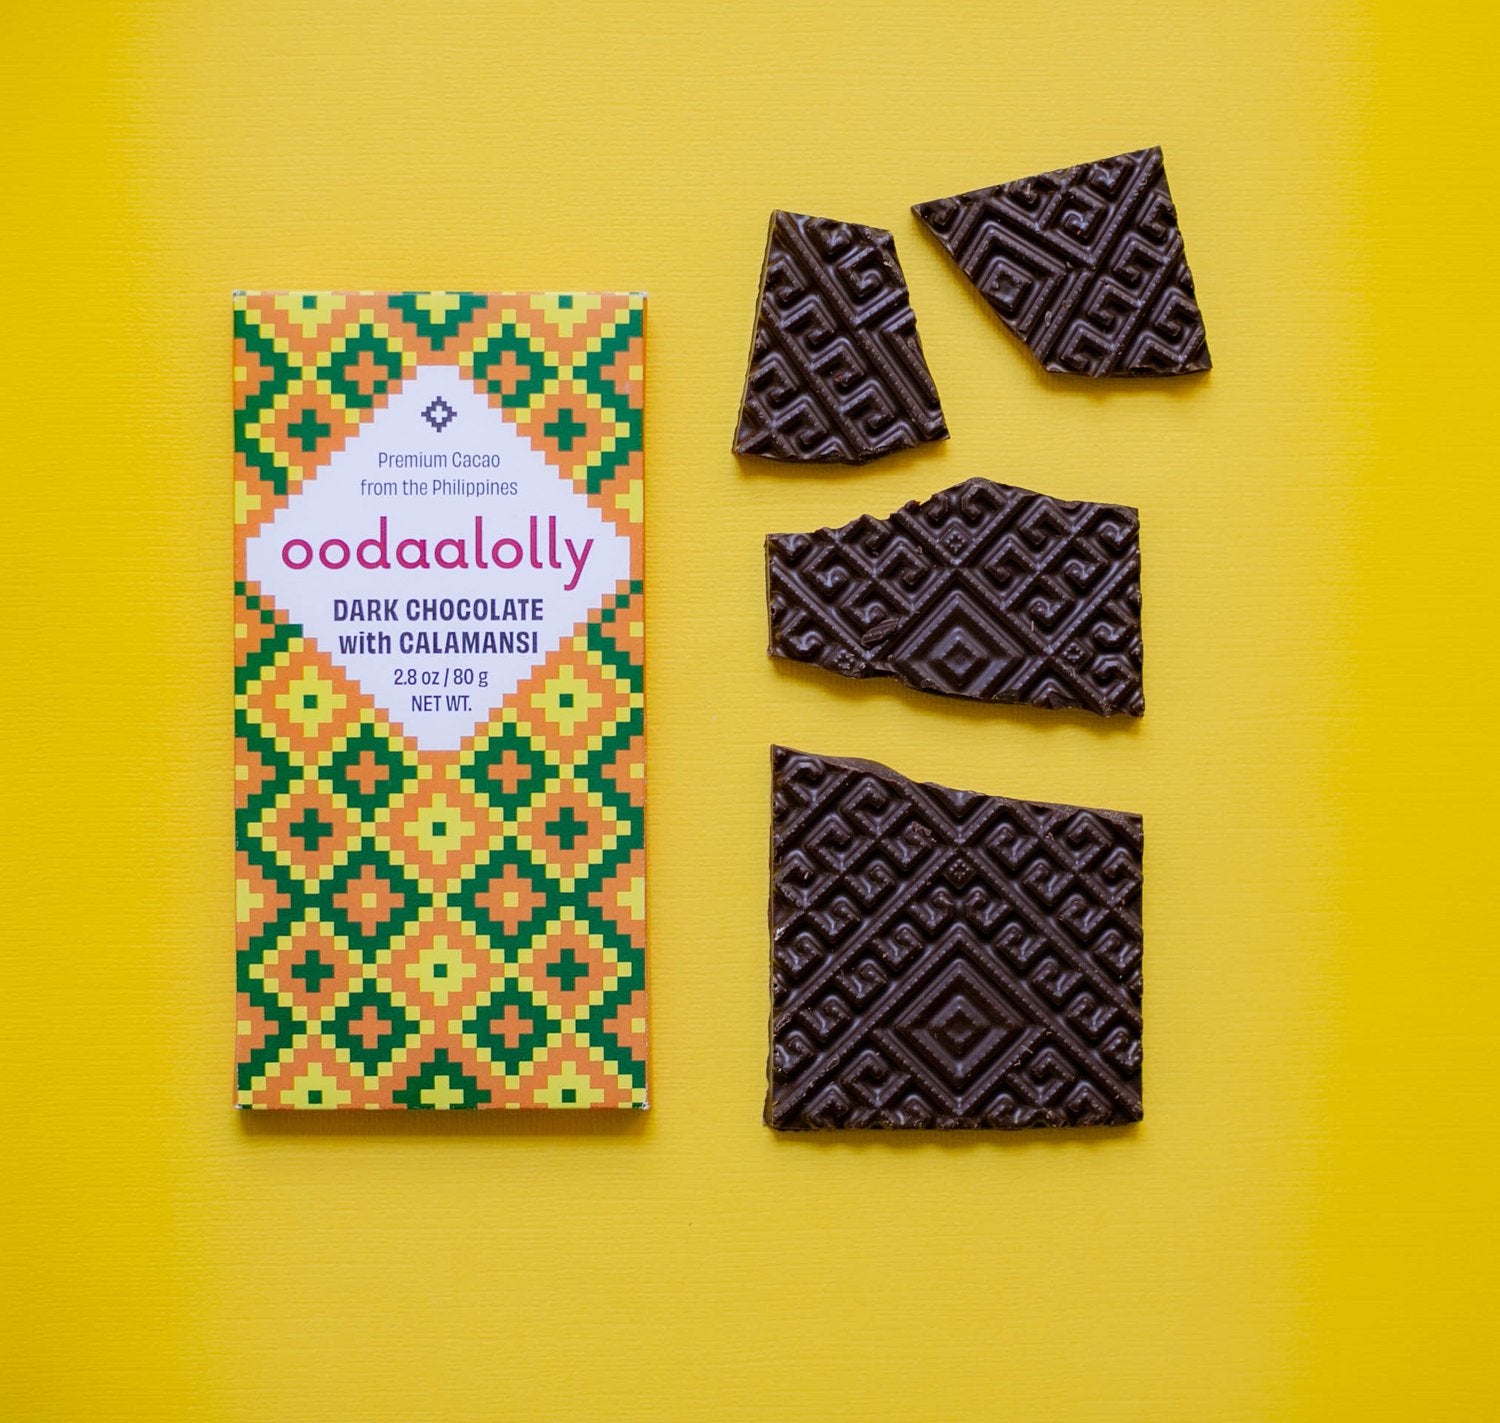 Oodaalolly's Signature 70% Dark Chocolate with Calamansi